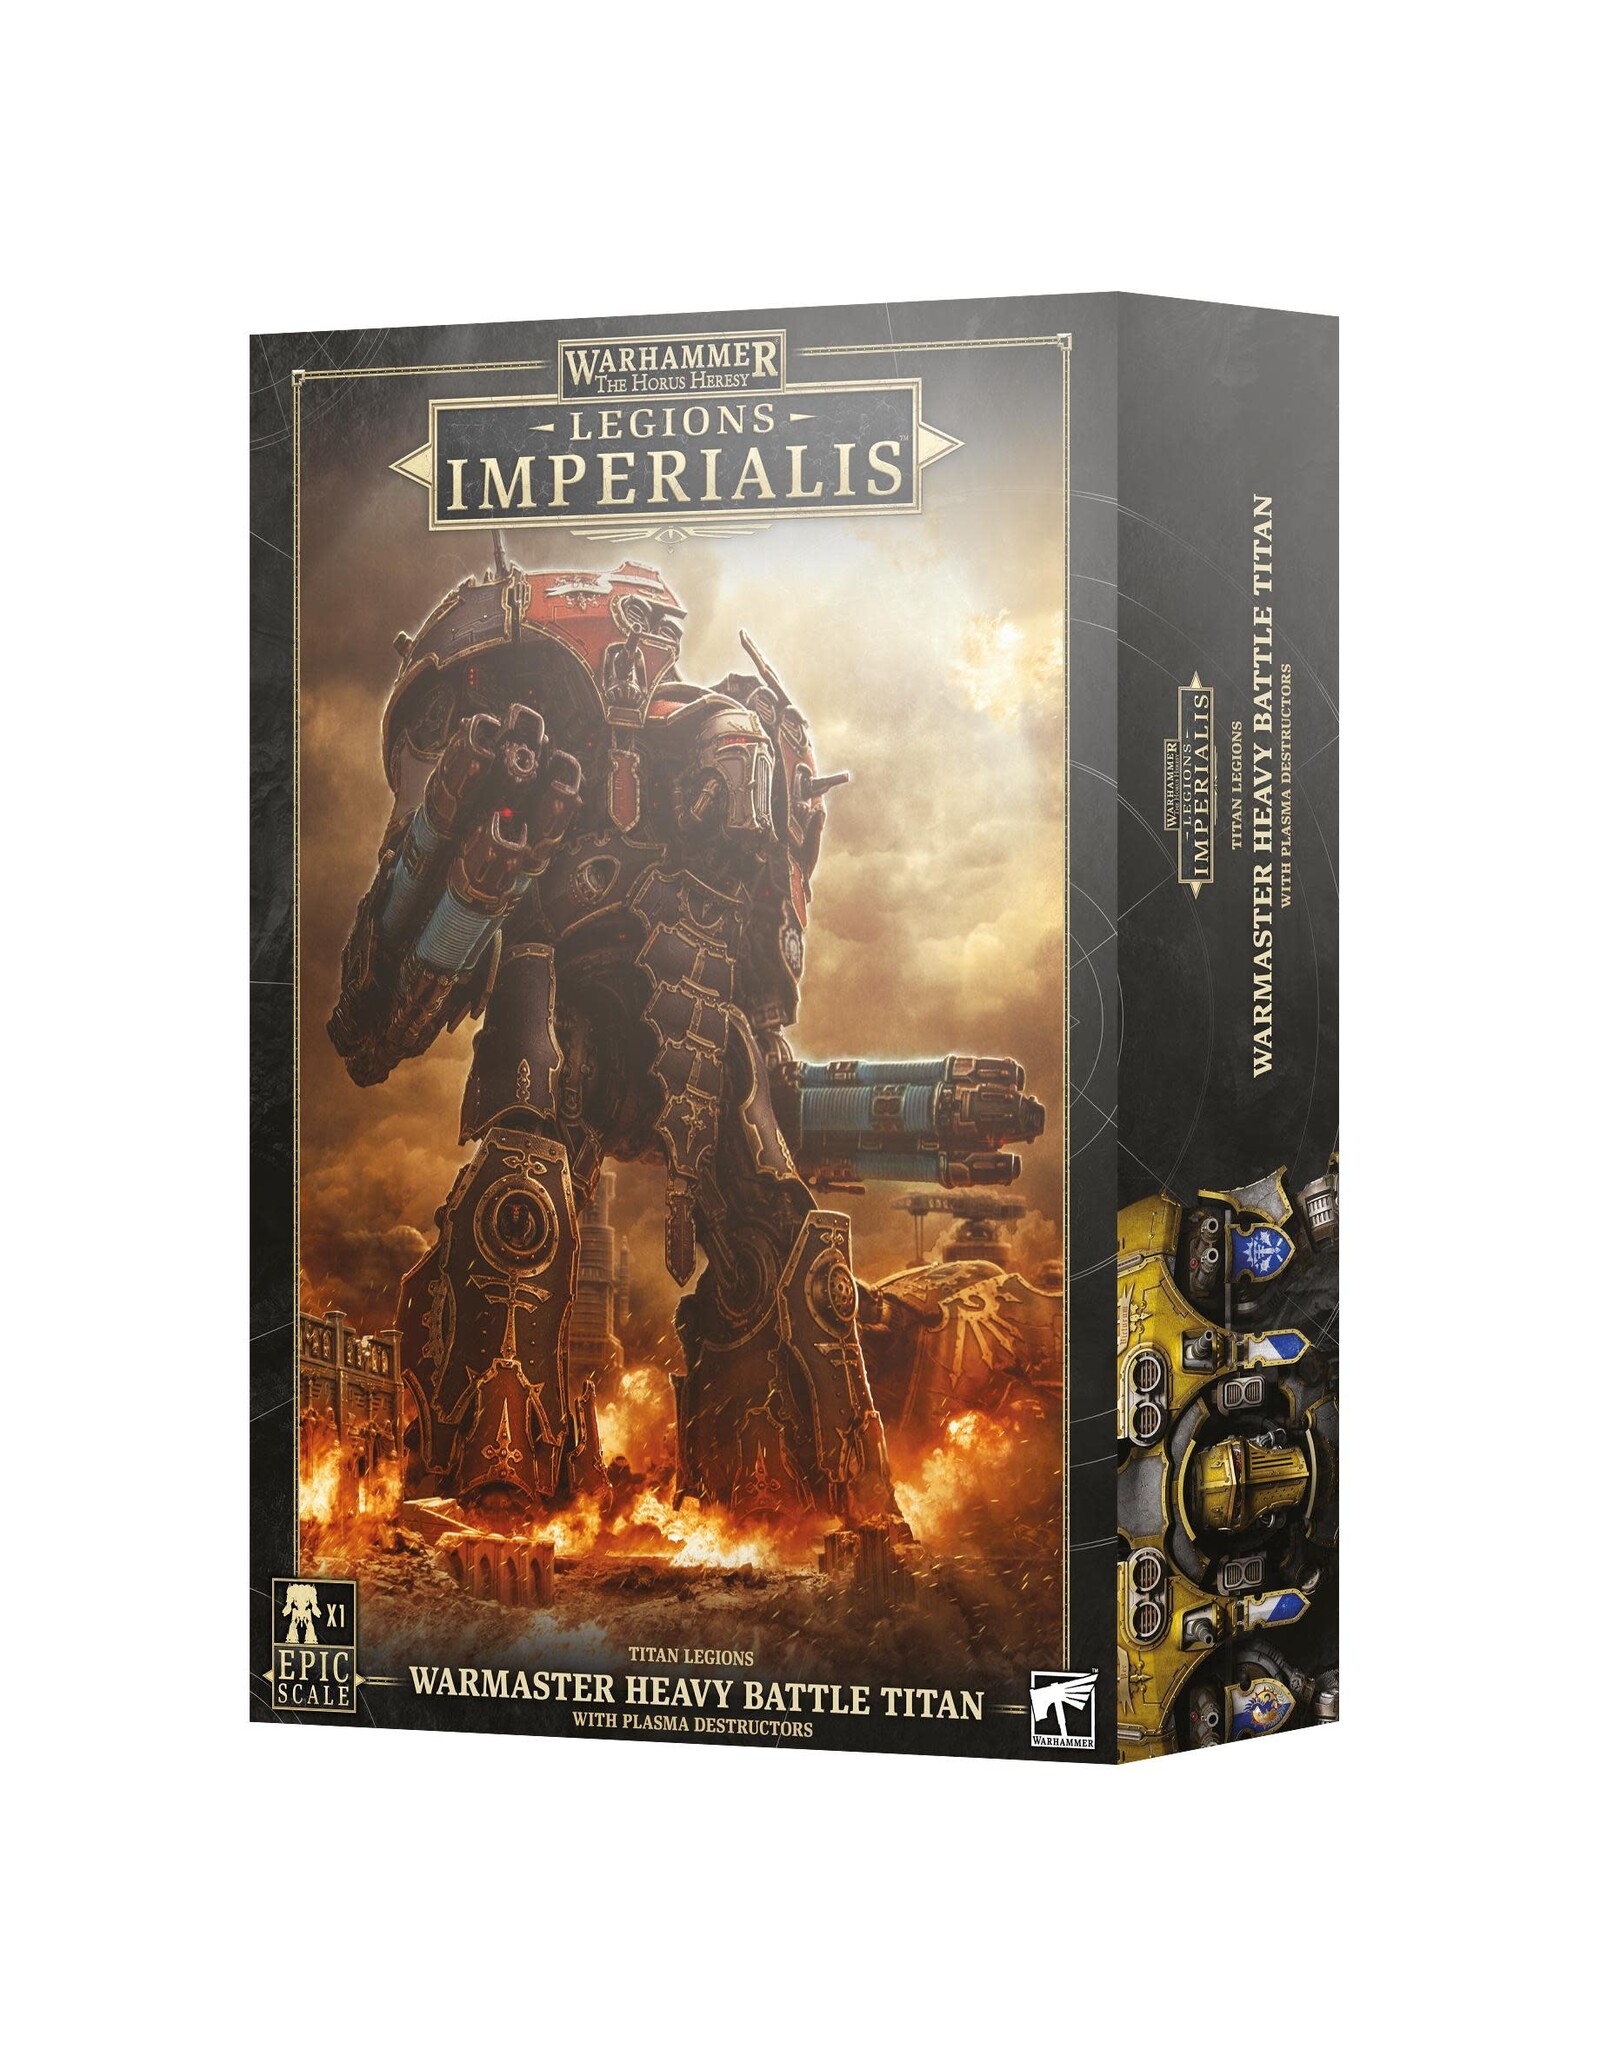 Games Workshop Legion Imperialis Warmaster Heavy Battle Titan with Plasma Destructors